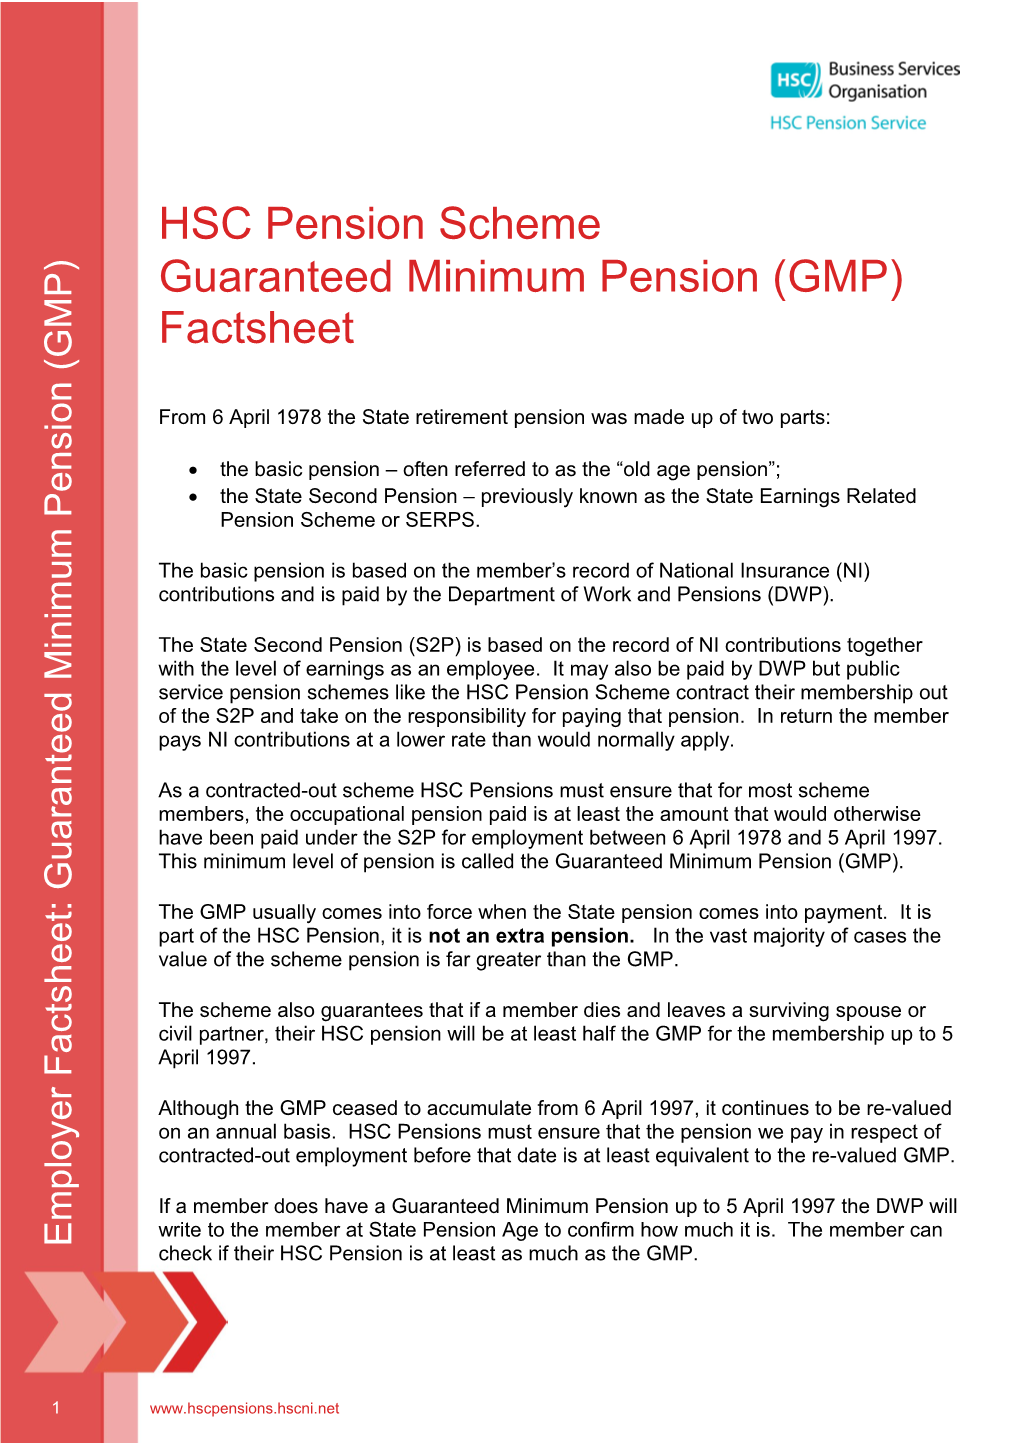 Guaranteed Minimum Pension (GMP) Factsheet